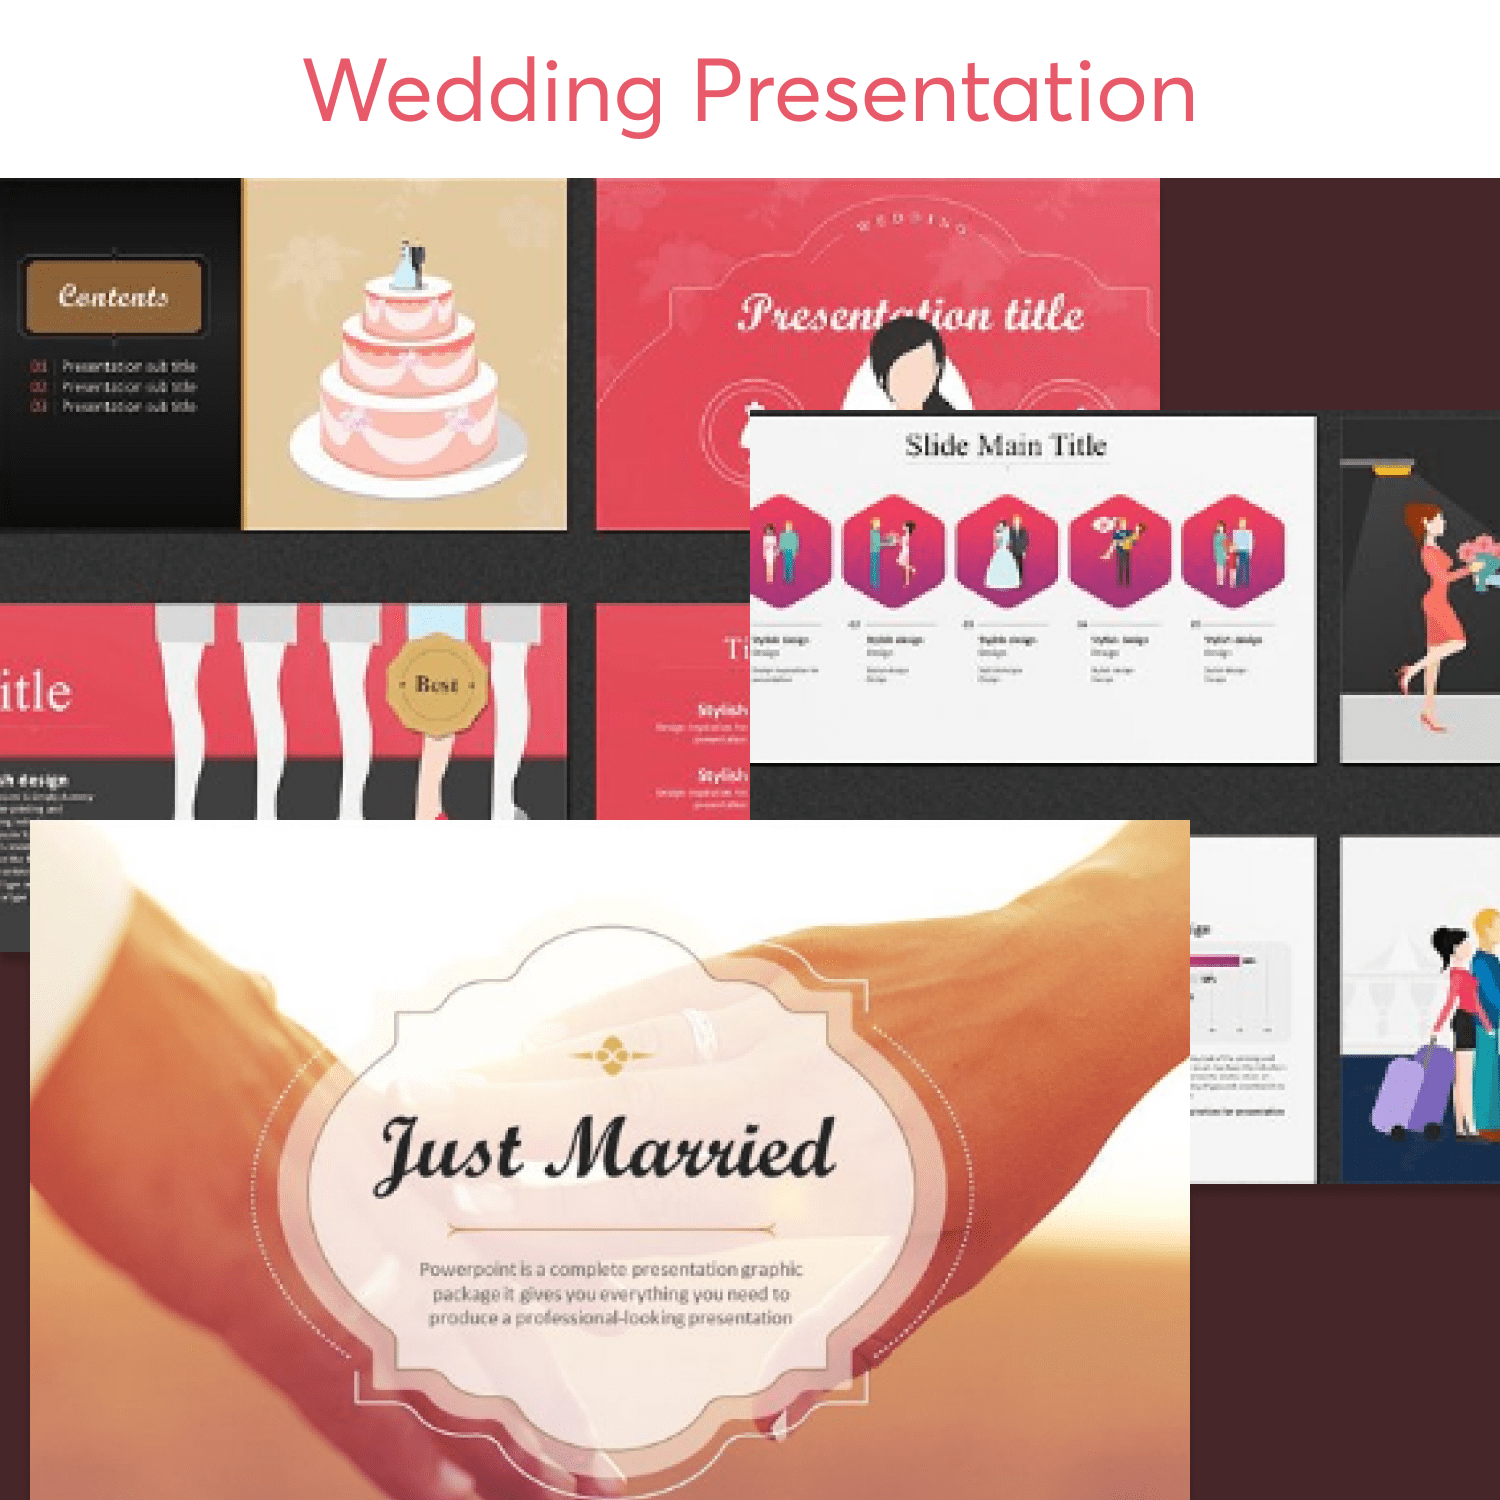 Wedding Presentation cover.